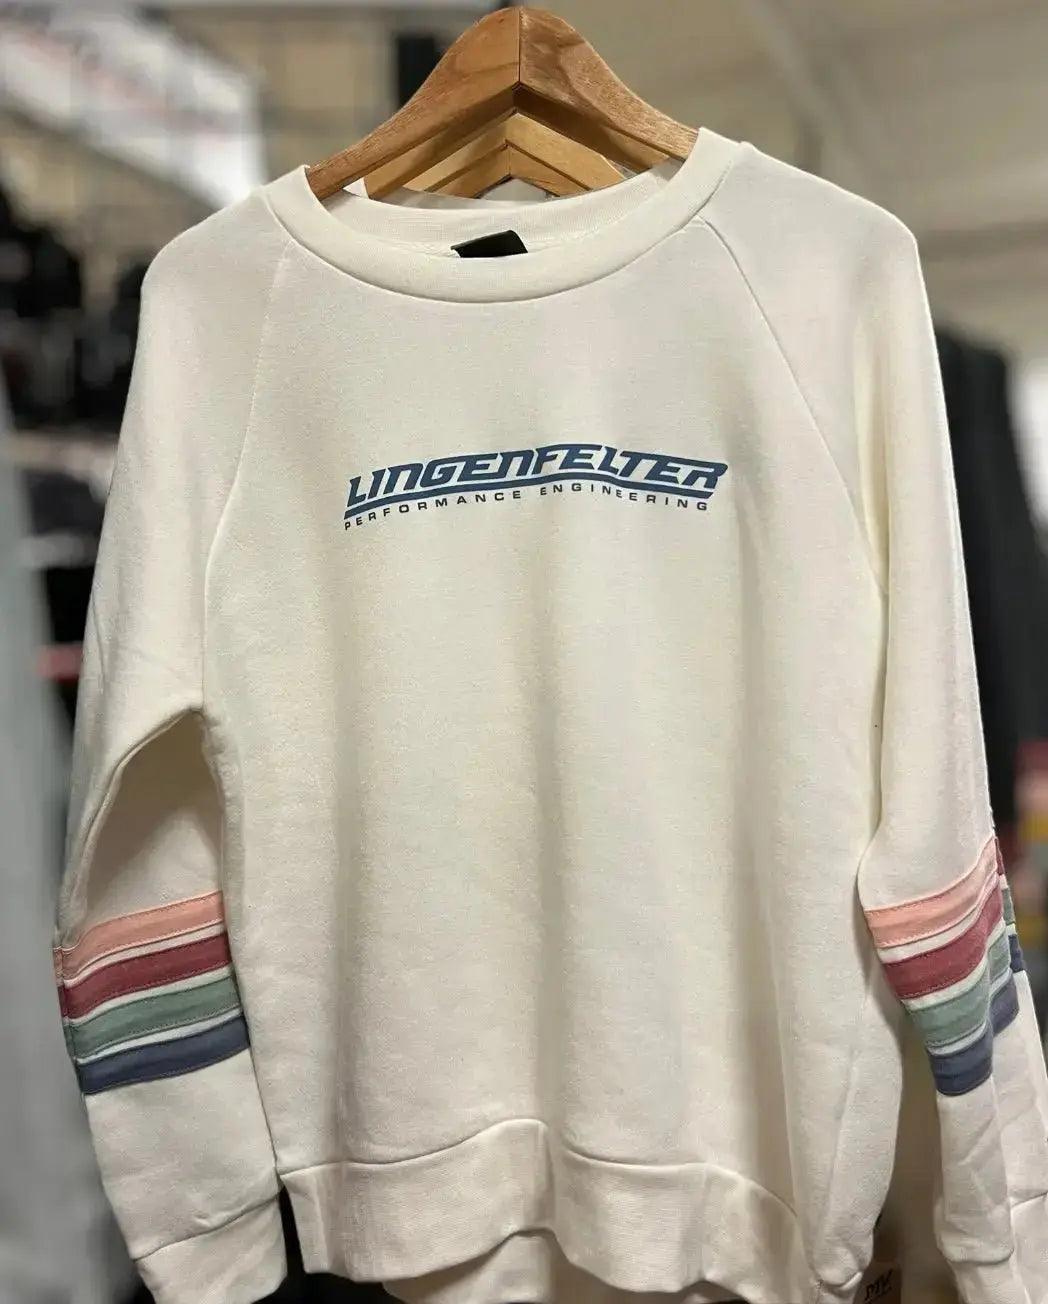 Lingenfelter Ladies Ivory Sweatshirt